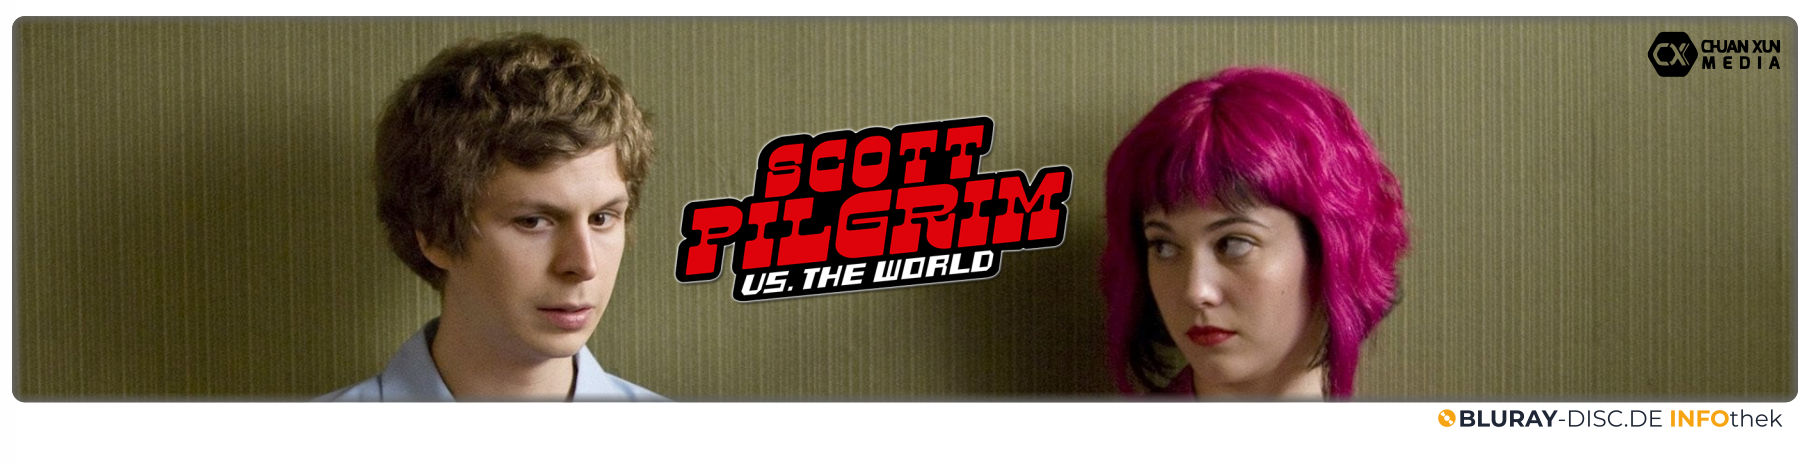 Scott_Pilgrim_vs_the_World.png